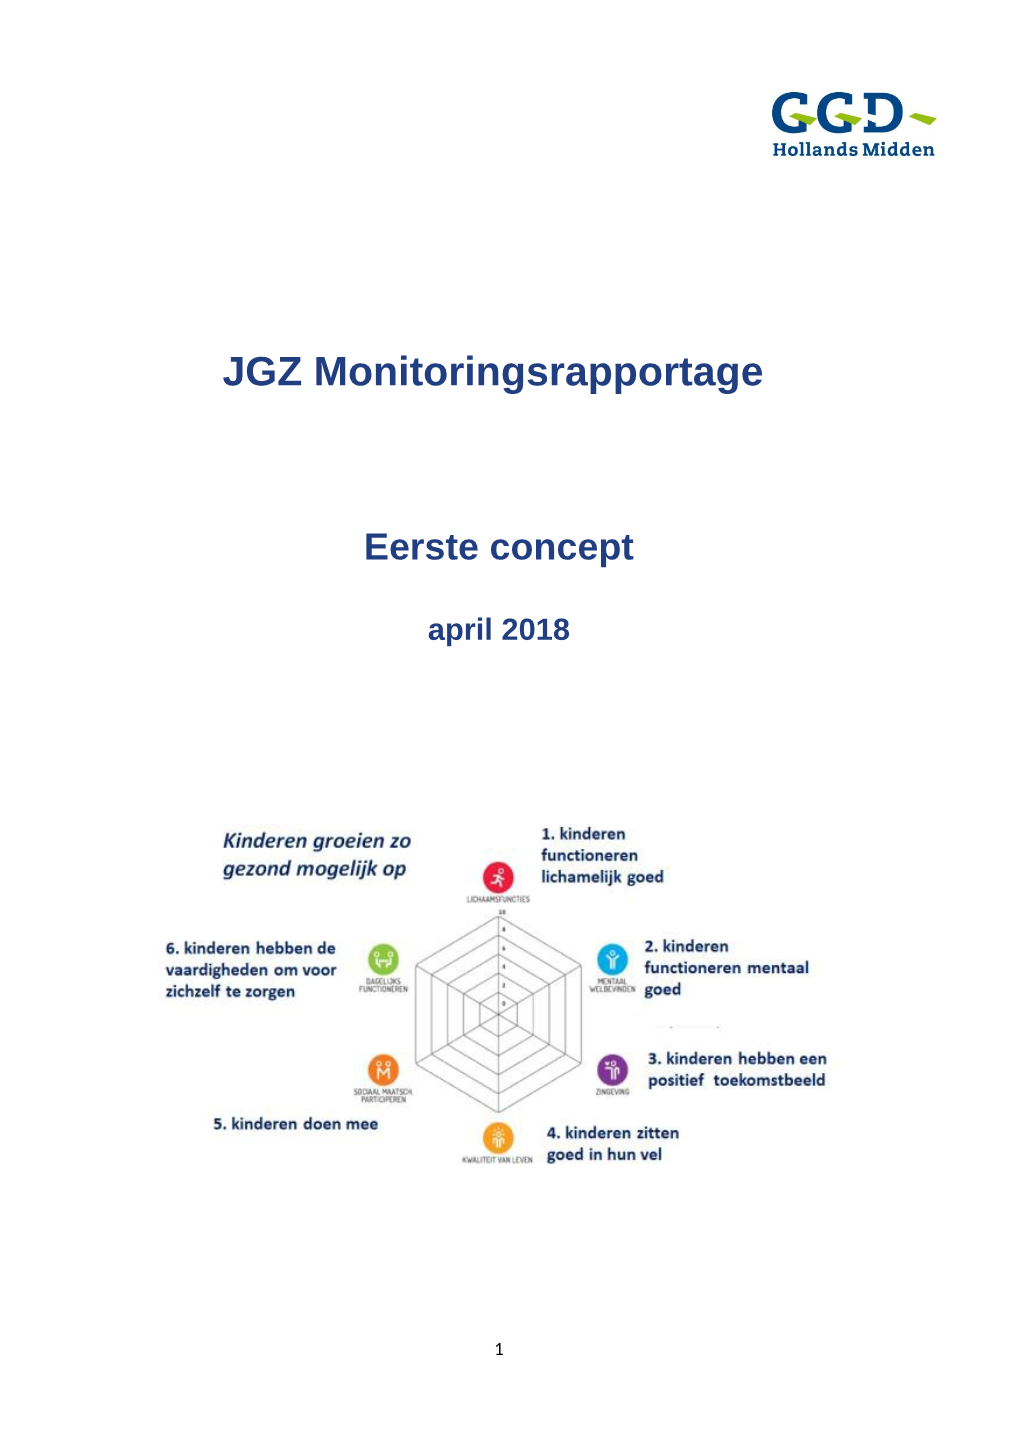 JGZ Monitoringsrapportage